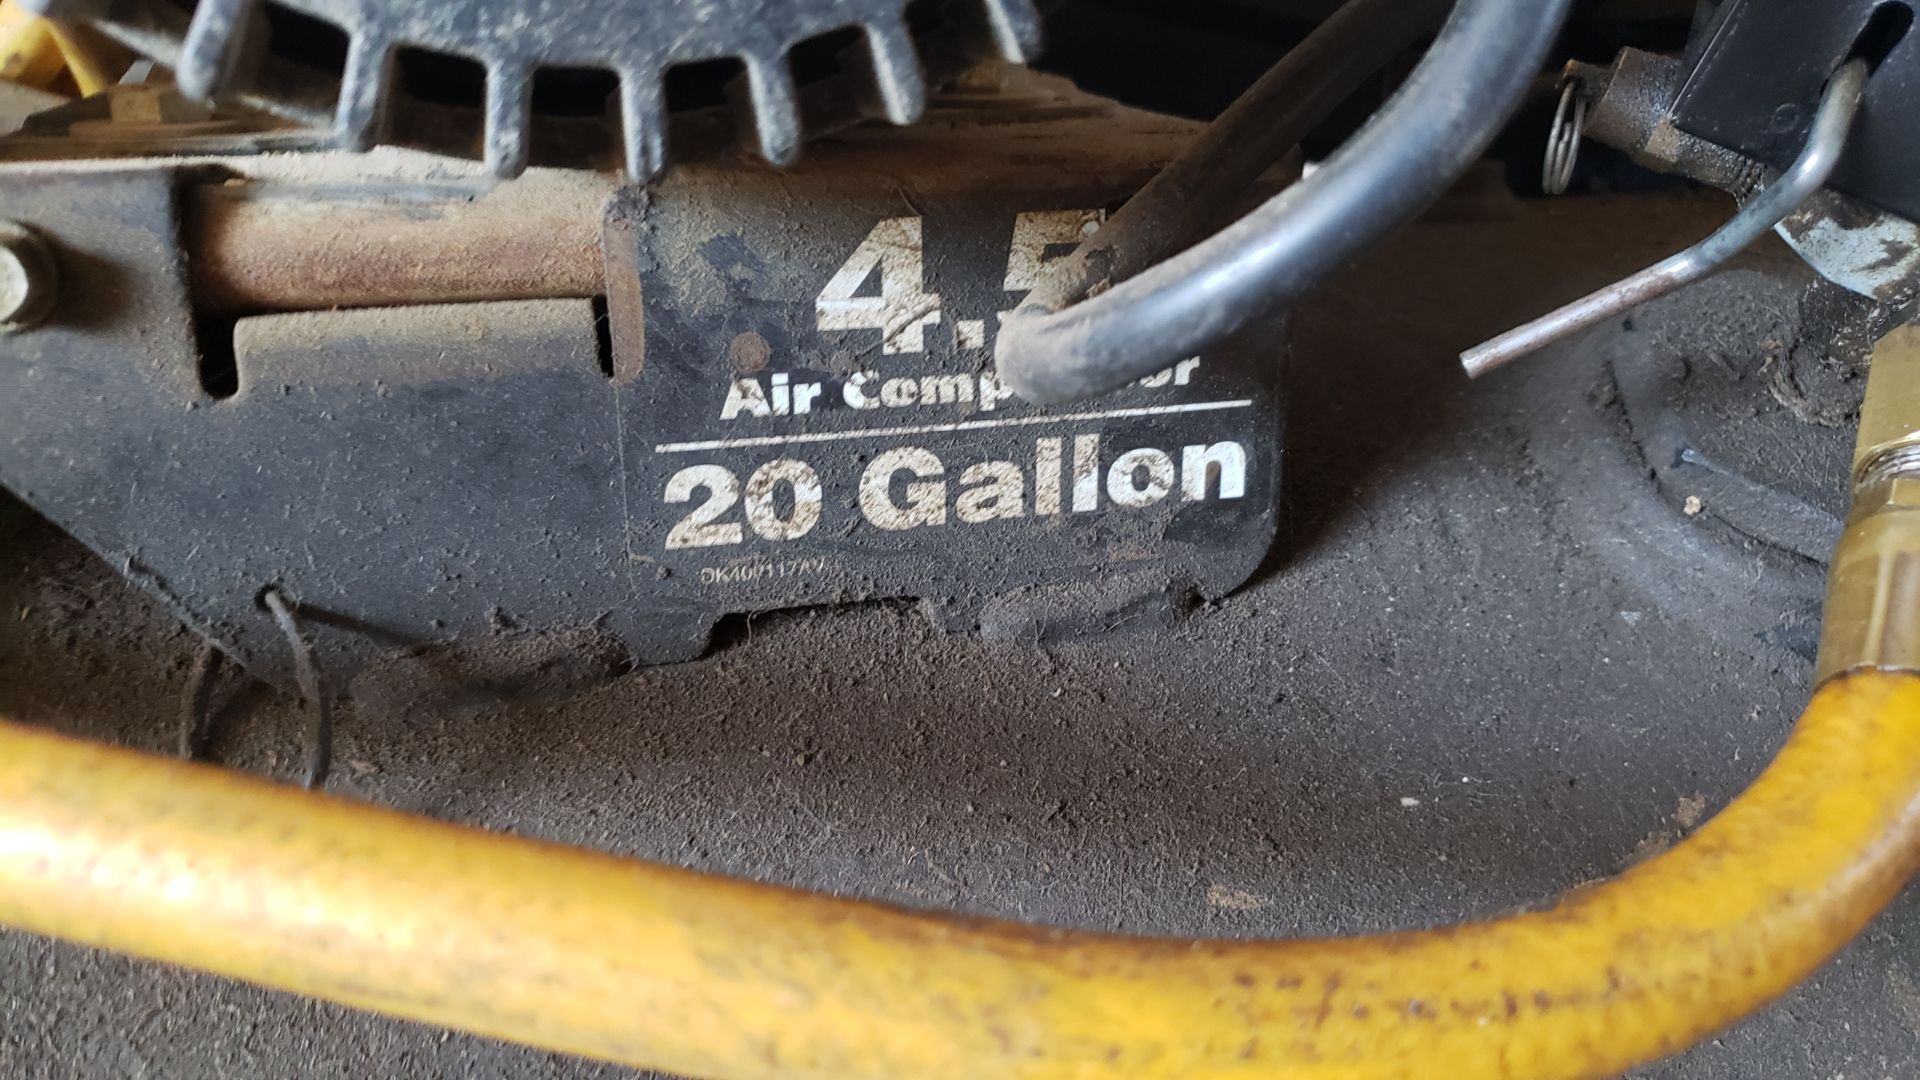 20 Gallon Air Compressor, 4.5 HP, 110v - Image 2 of 2